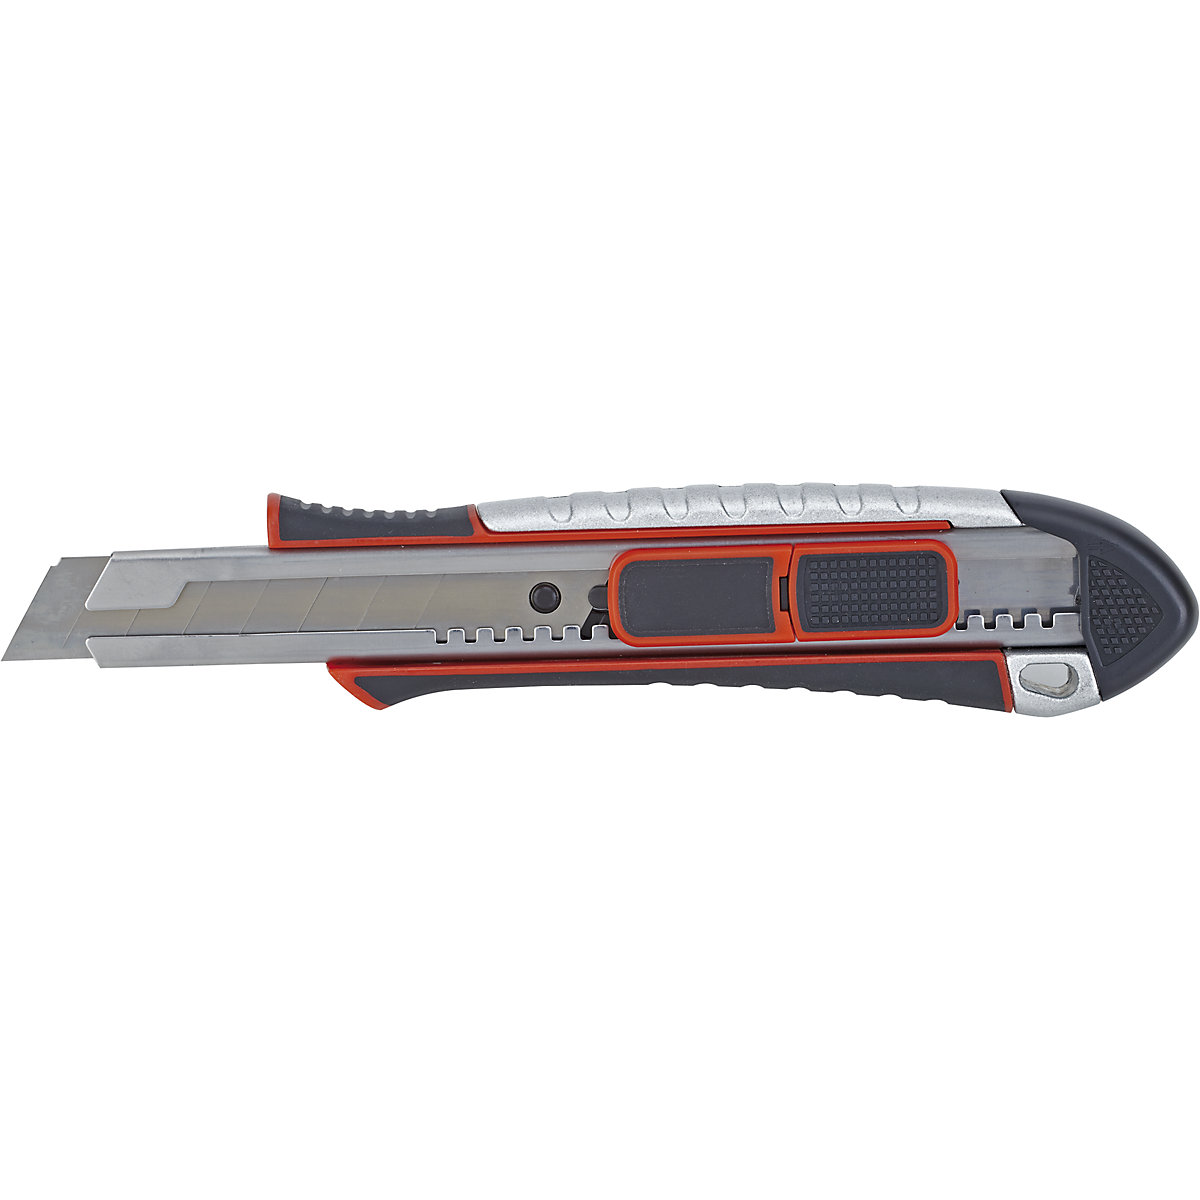 Bezpečnostný ostrý vysúvací nôž – MAUL, MAULtool, šírka čepele 18 mm, OJ 10 ks